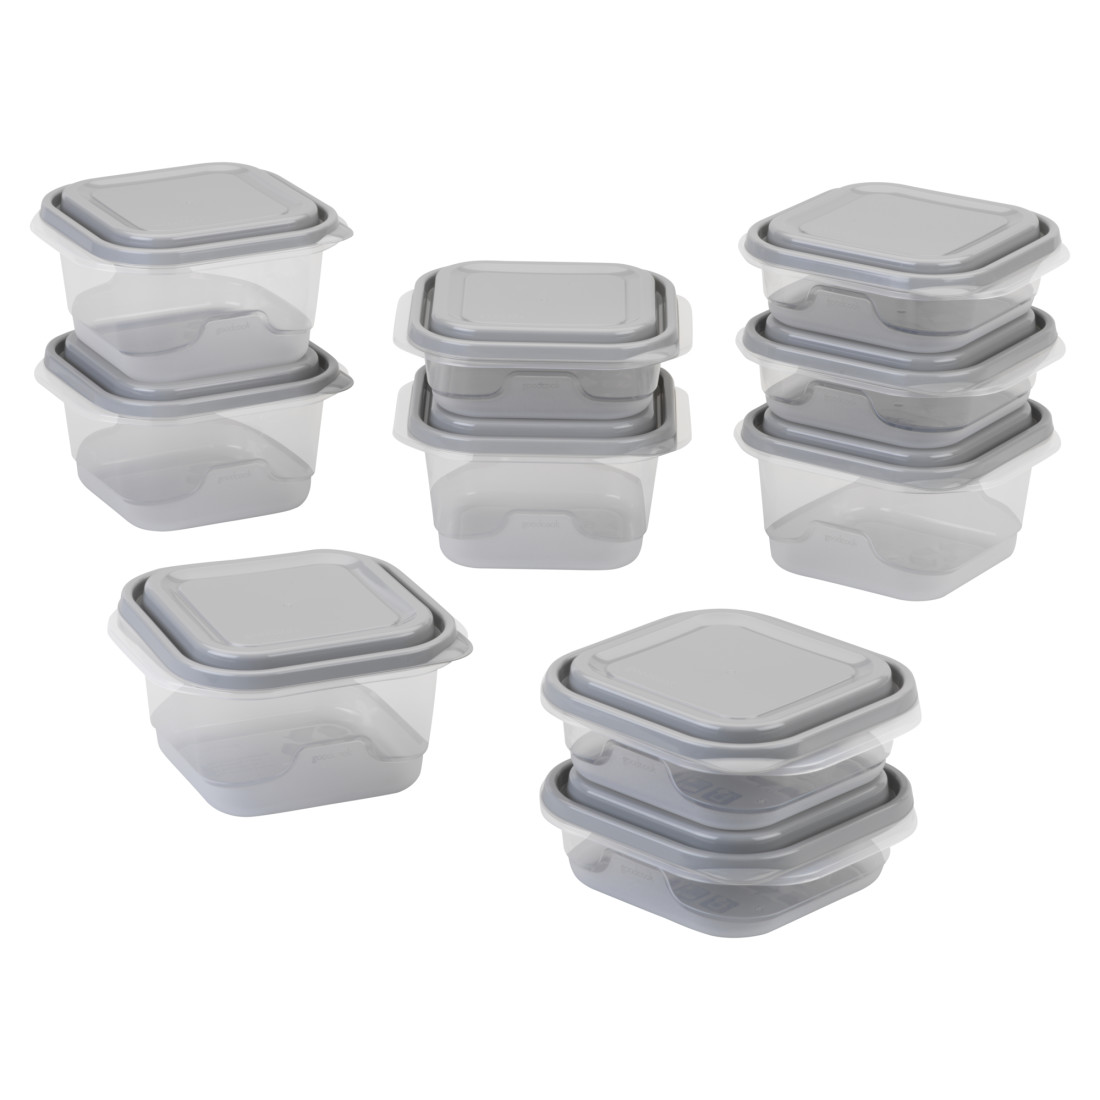 Rectangular Food Container Meal Prep Set 2 x 2.9 cup + 2 x 2 cup Conta